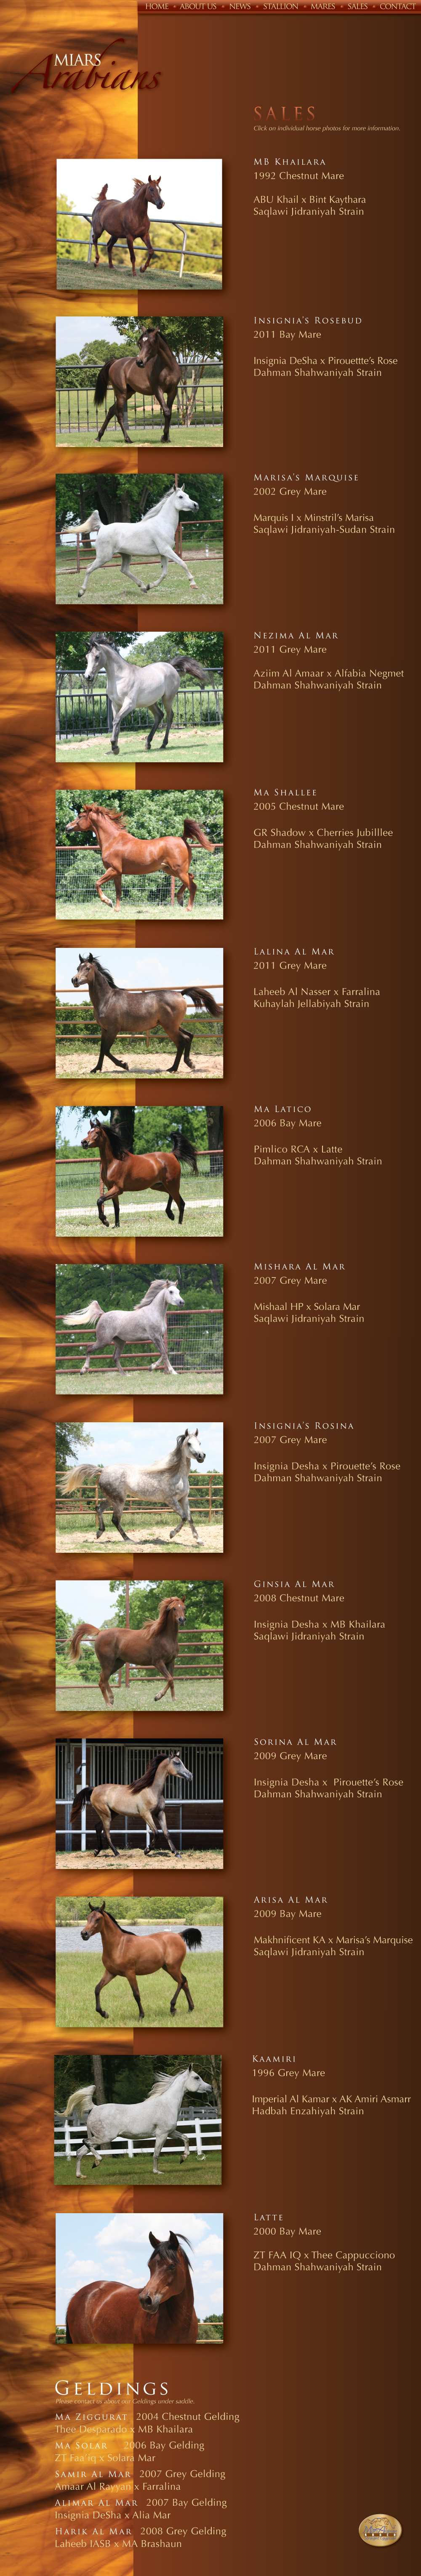 Miars Arabians Horses For Sale